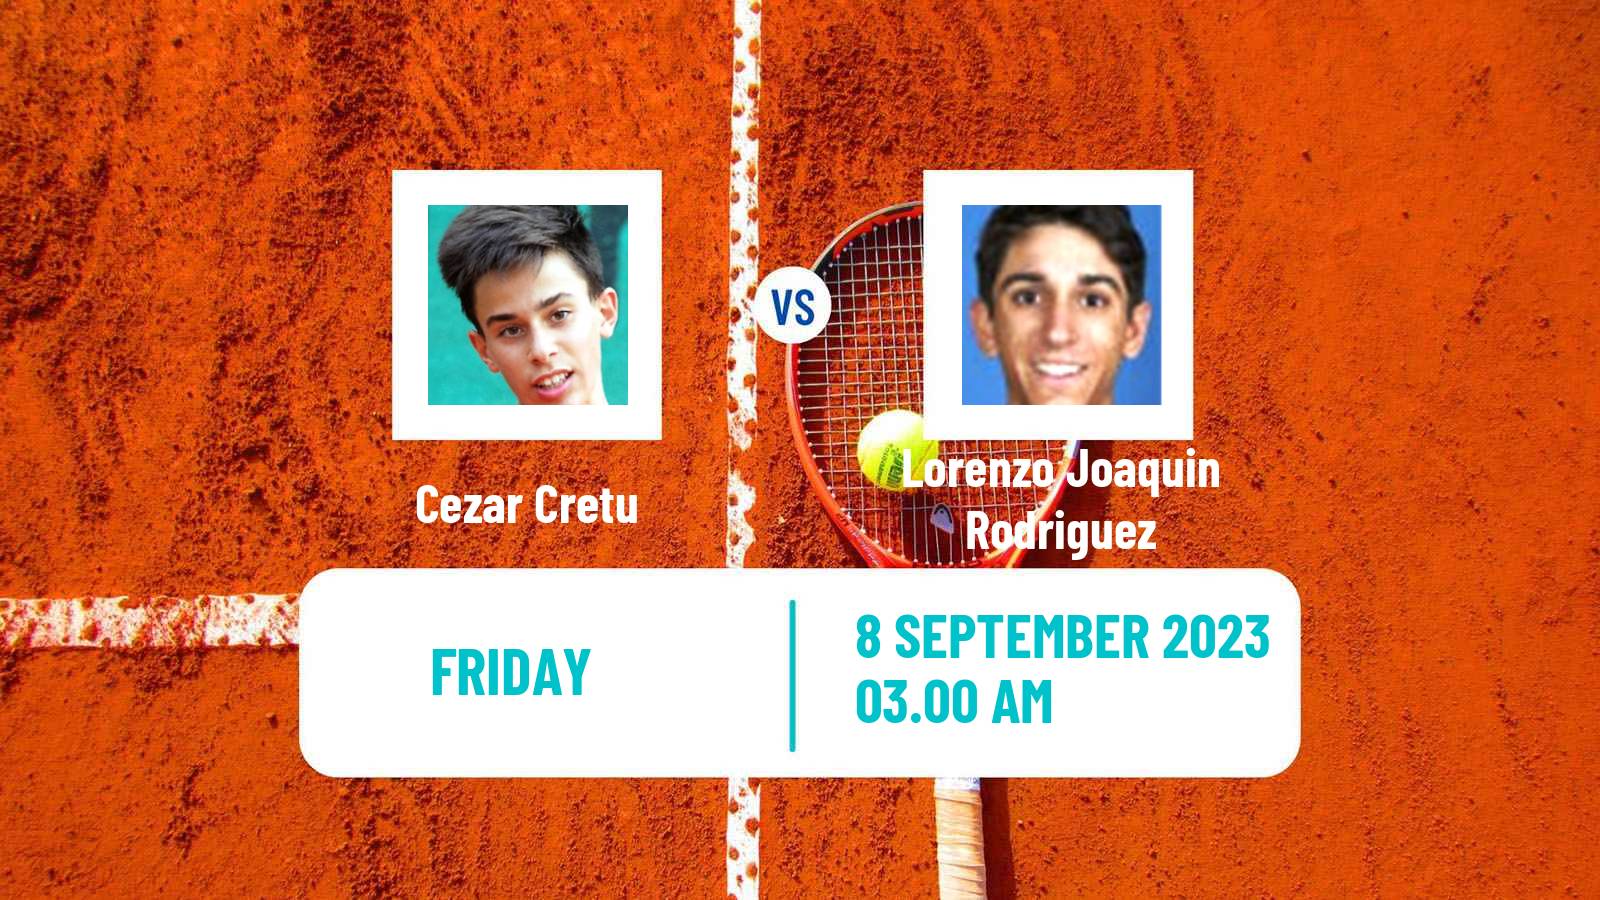 Tennis ITF M15 Constanta 2 Men Cezar Cretu - Lorenzo Joaquin Rodriguez